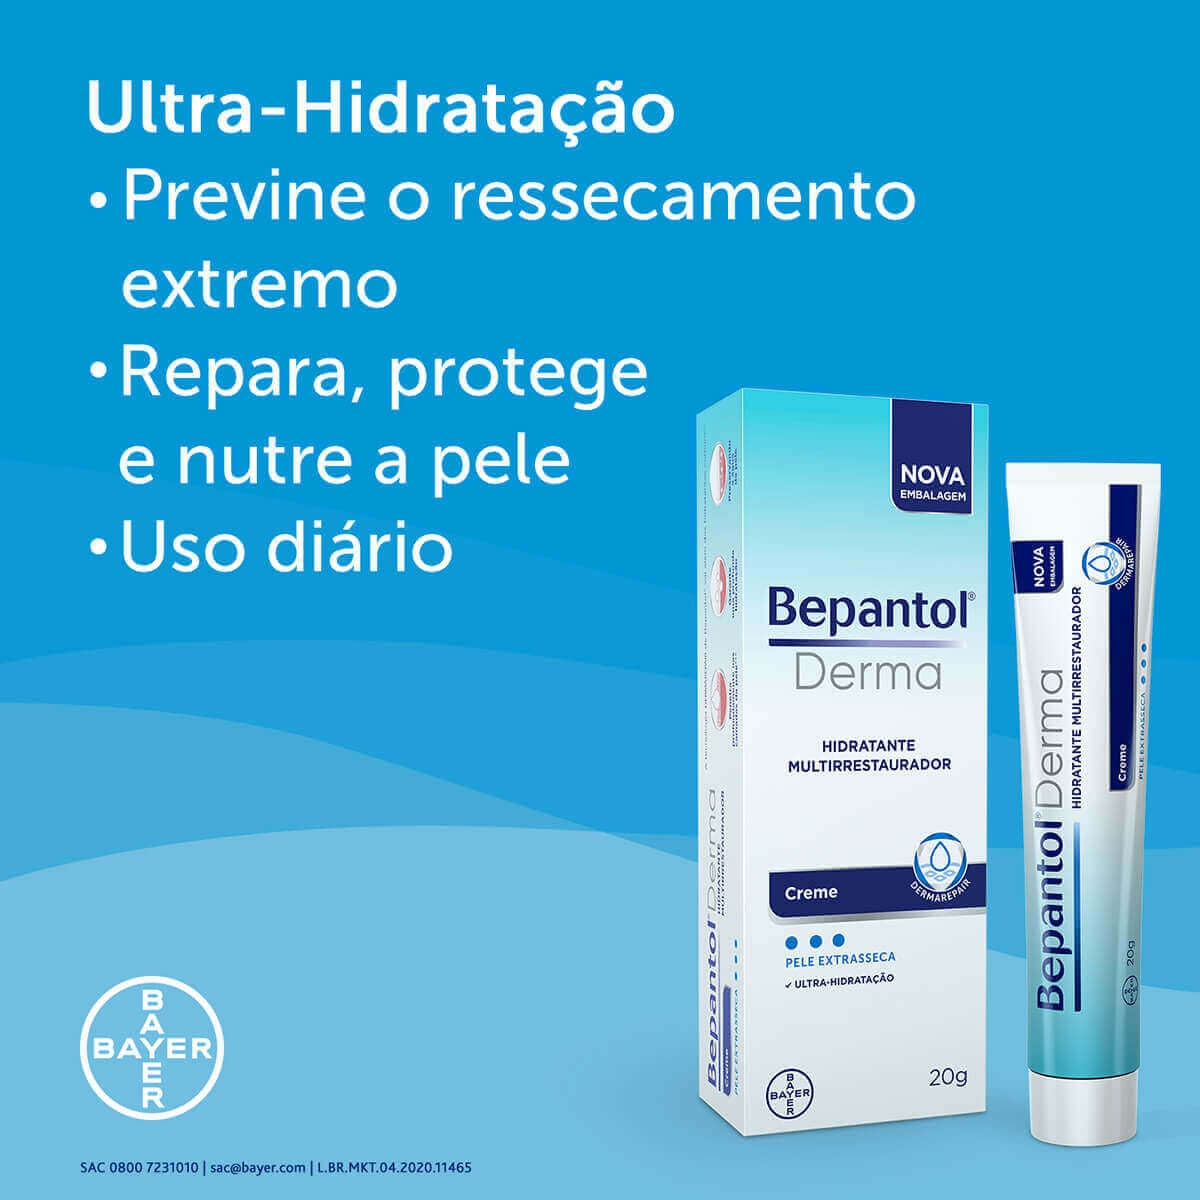 Bépantol Derma Multirestorative Hydrating Cream - 20g